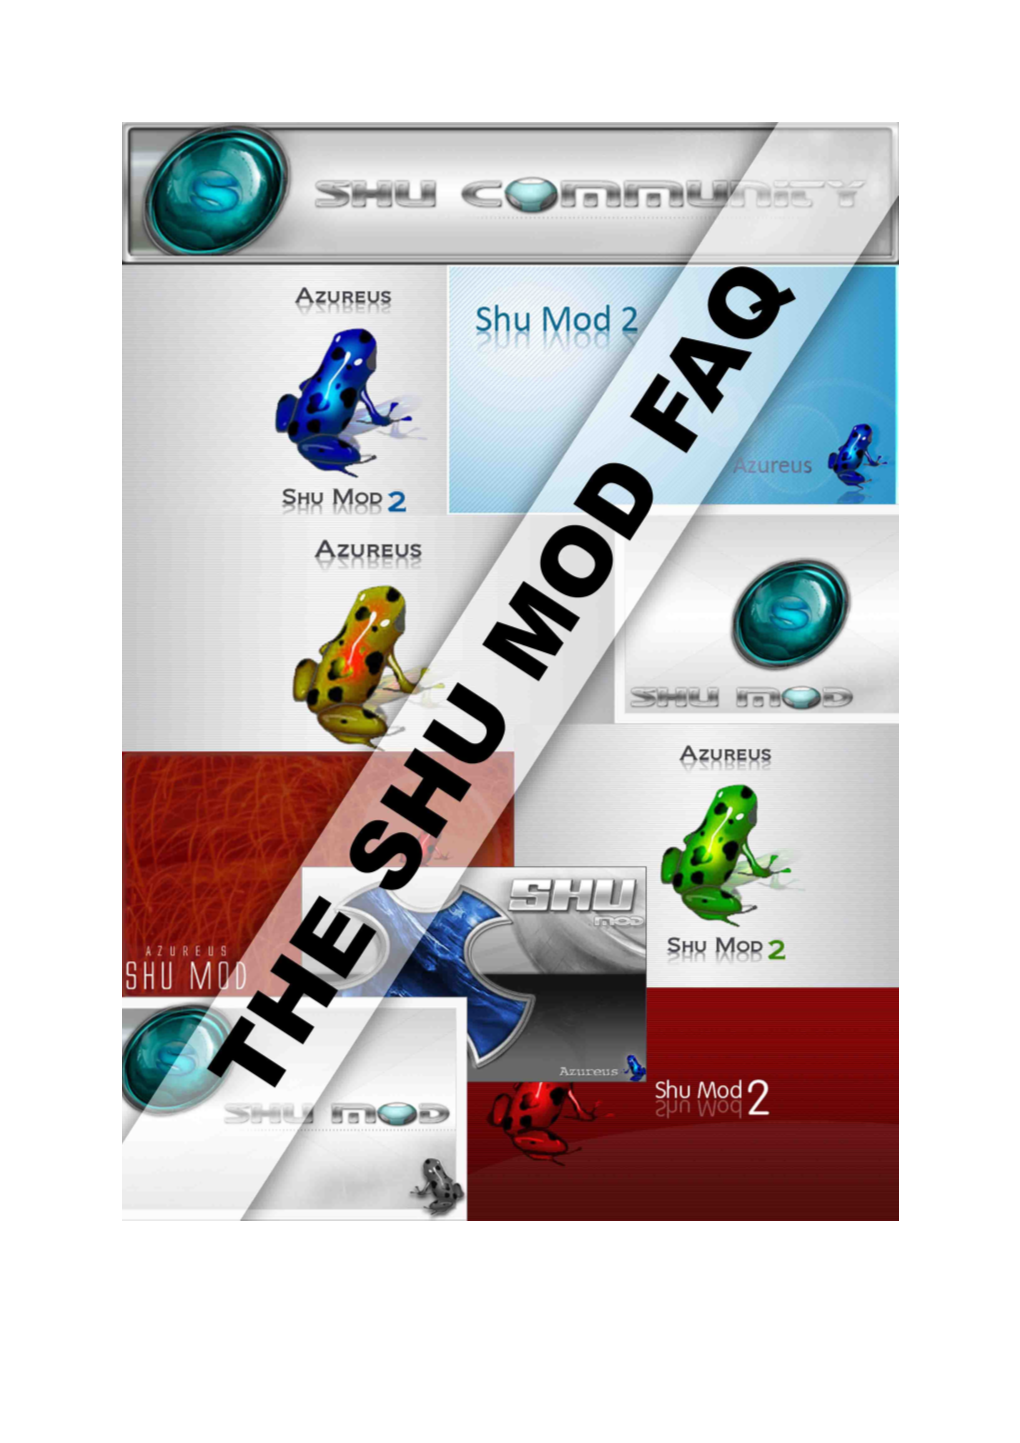 What Is Azureus Shu Mod?